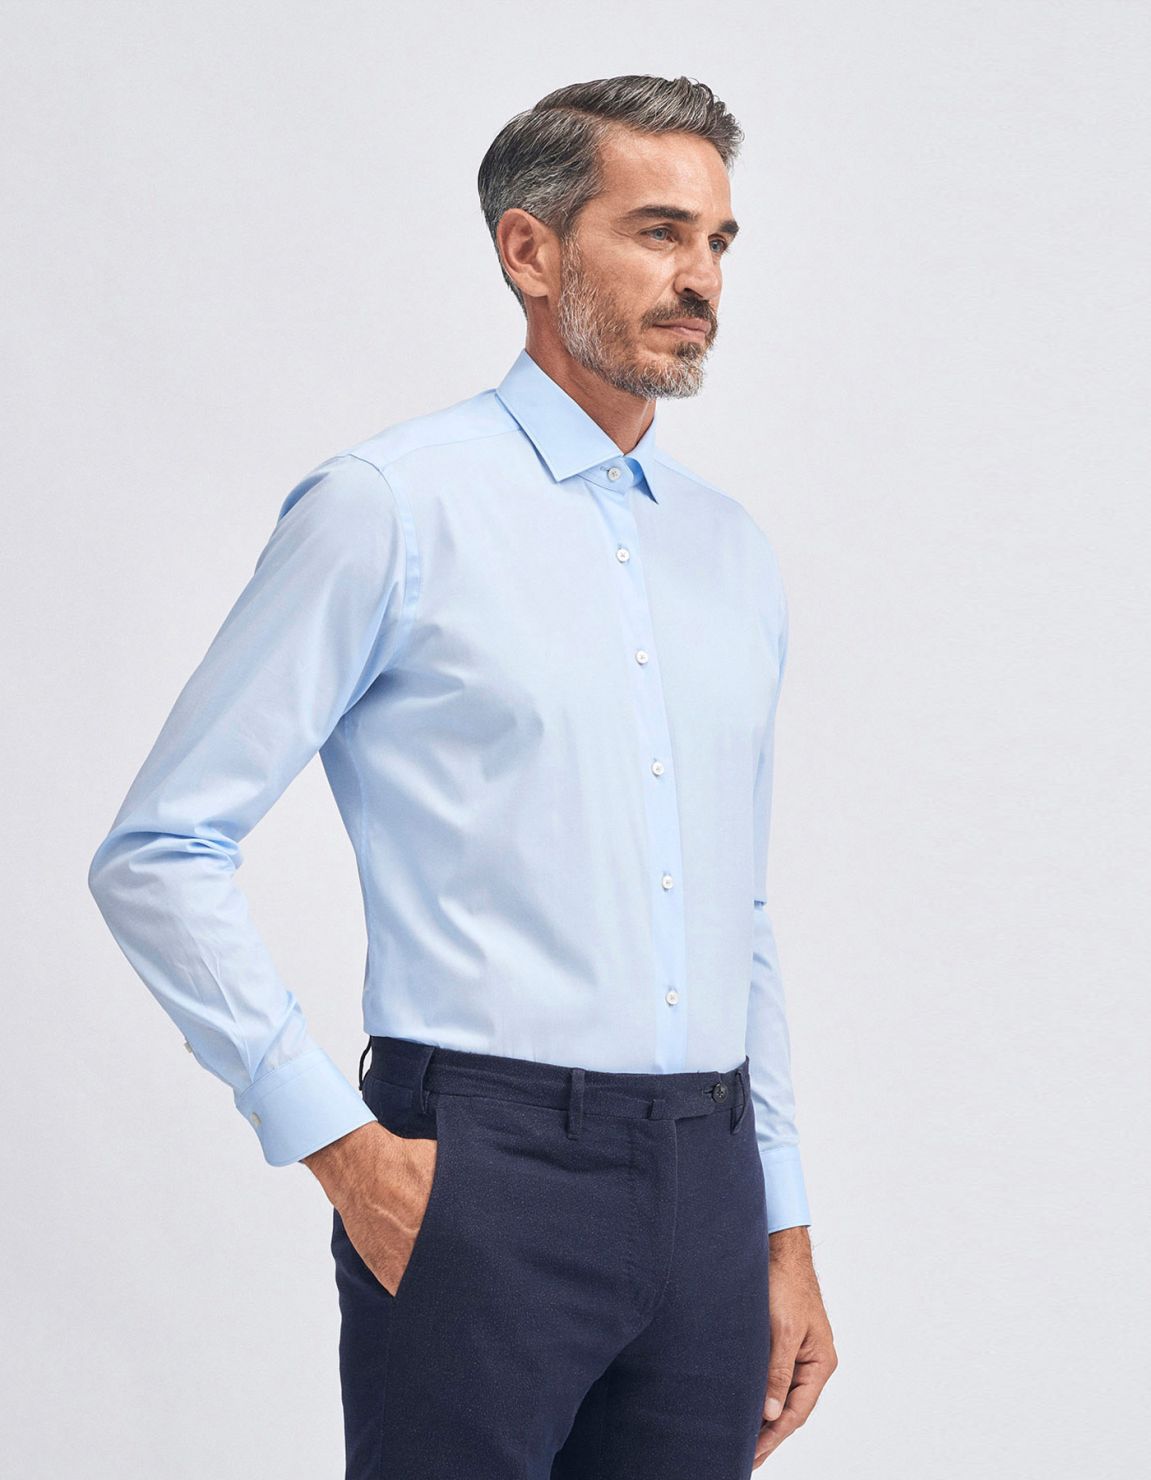 Shirt Collar small cutaway Light Blue Canvas Tailor Custom Fit 1